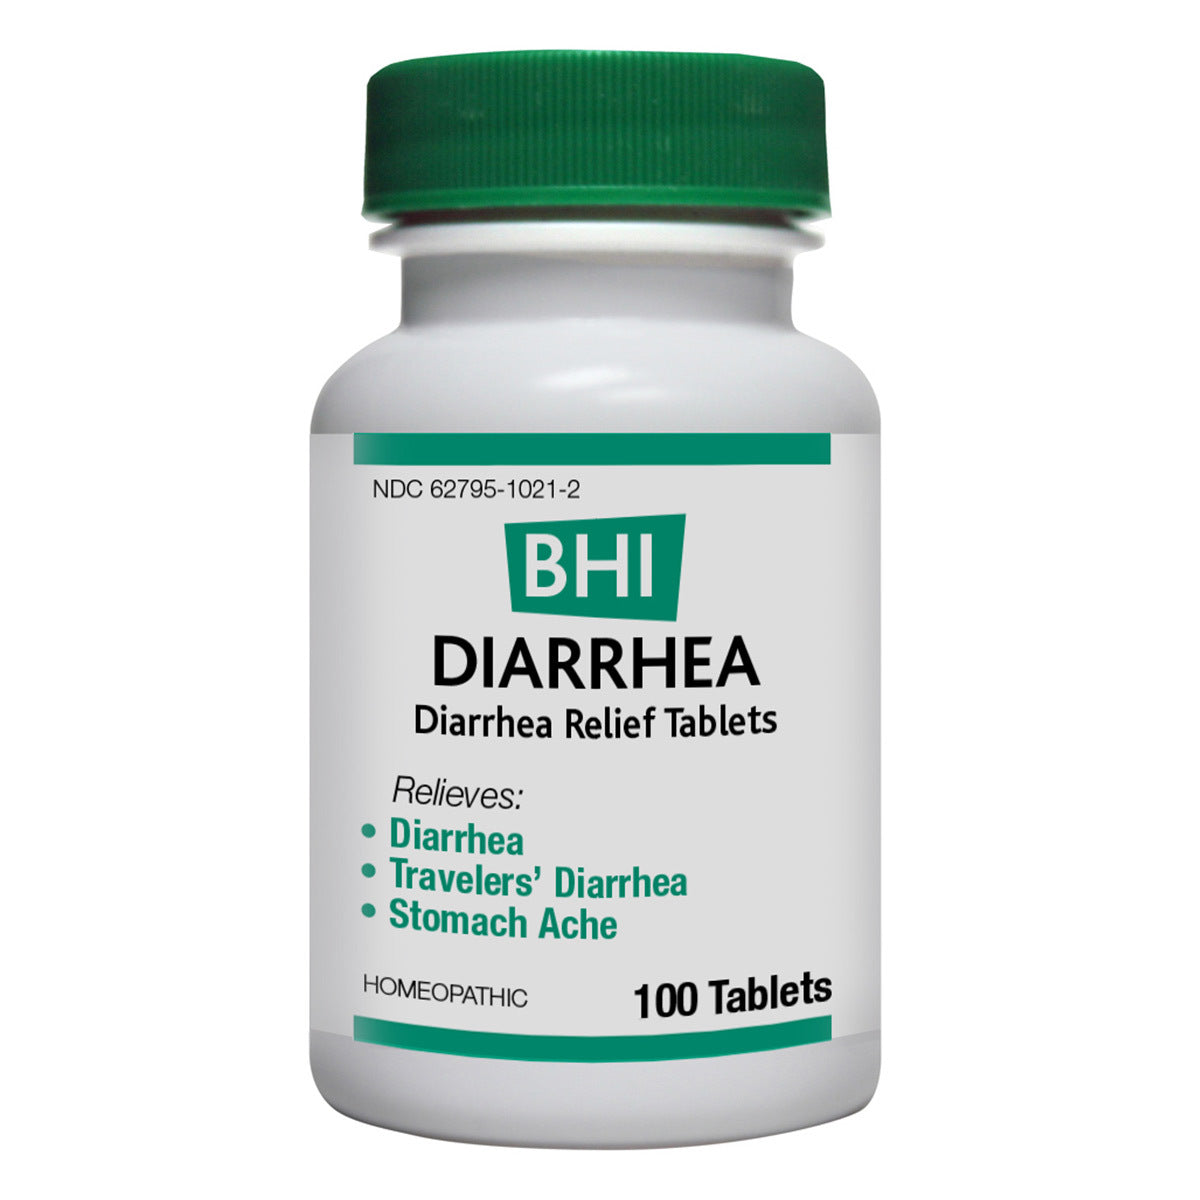 Primary image of Diarrhea